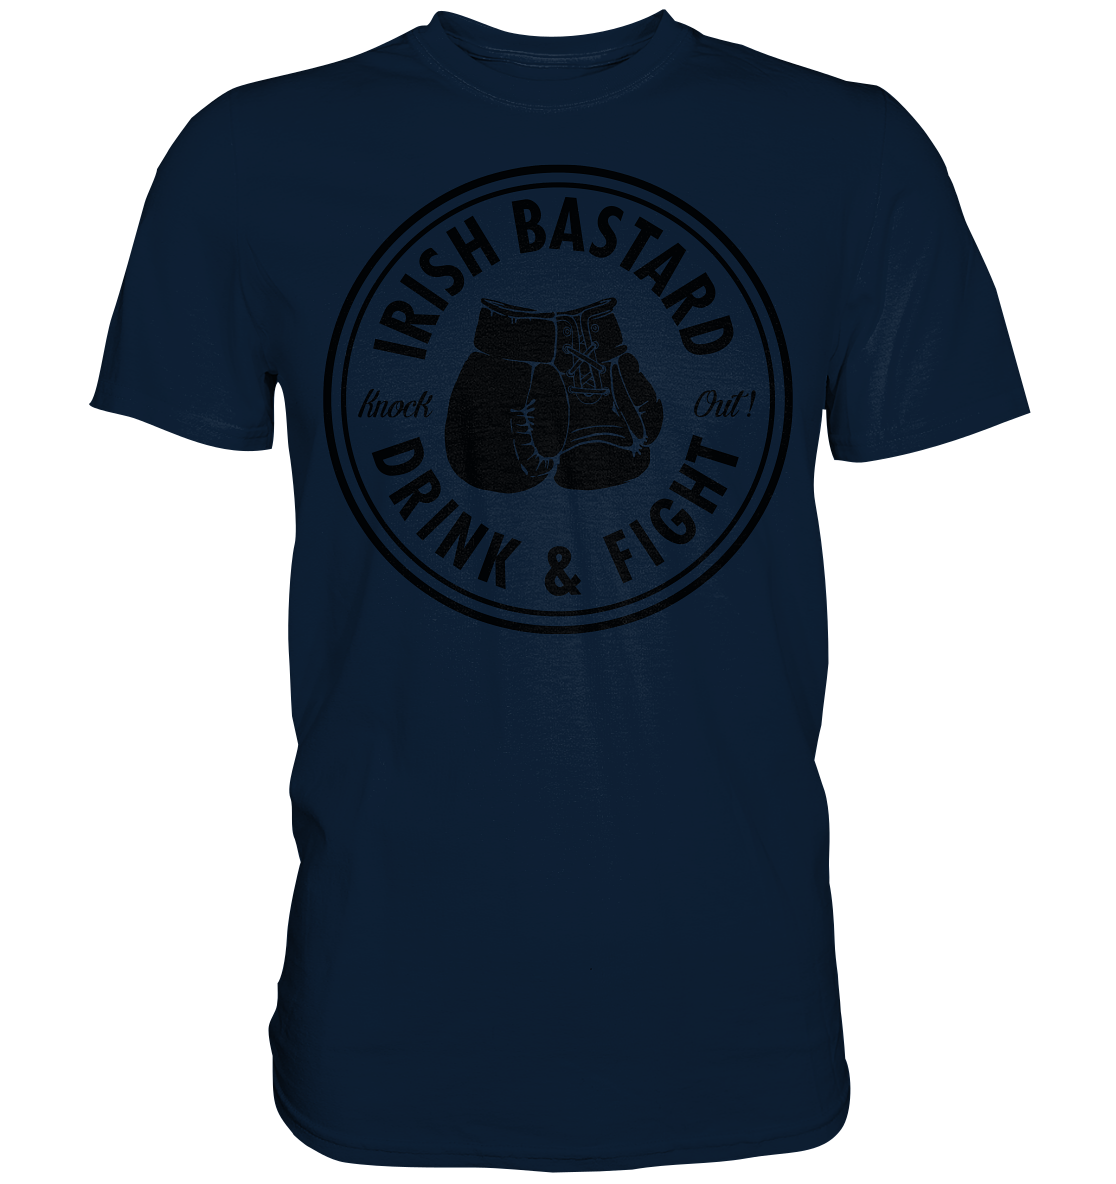 Irish Bastard "Drink & Fight" - Premium Shirt